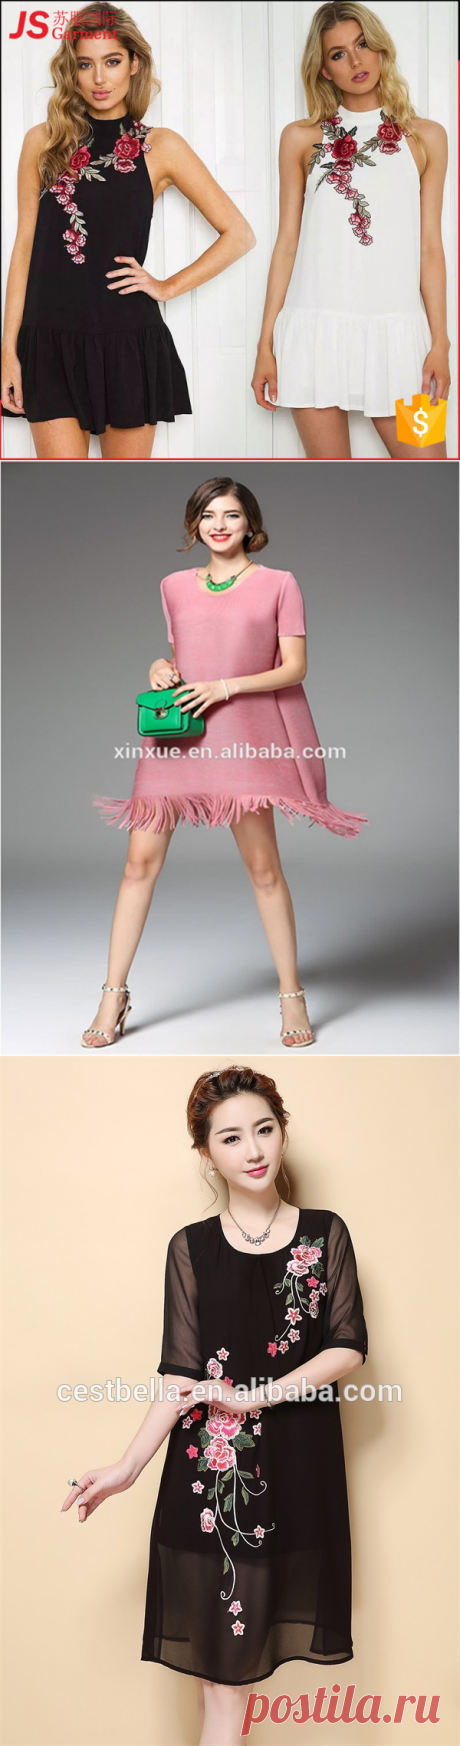 vestidos simples curtos de Atacado - Compre os melhores lotes vestidos simples curtos de atacadistas vestidos simples curtos da China on-line | Alibaba.com